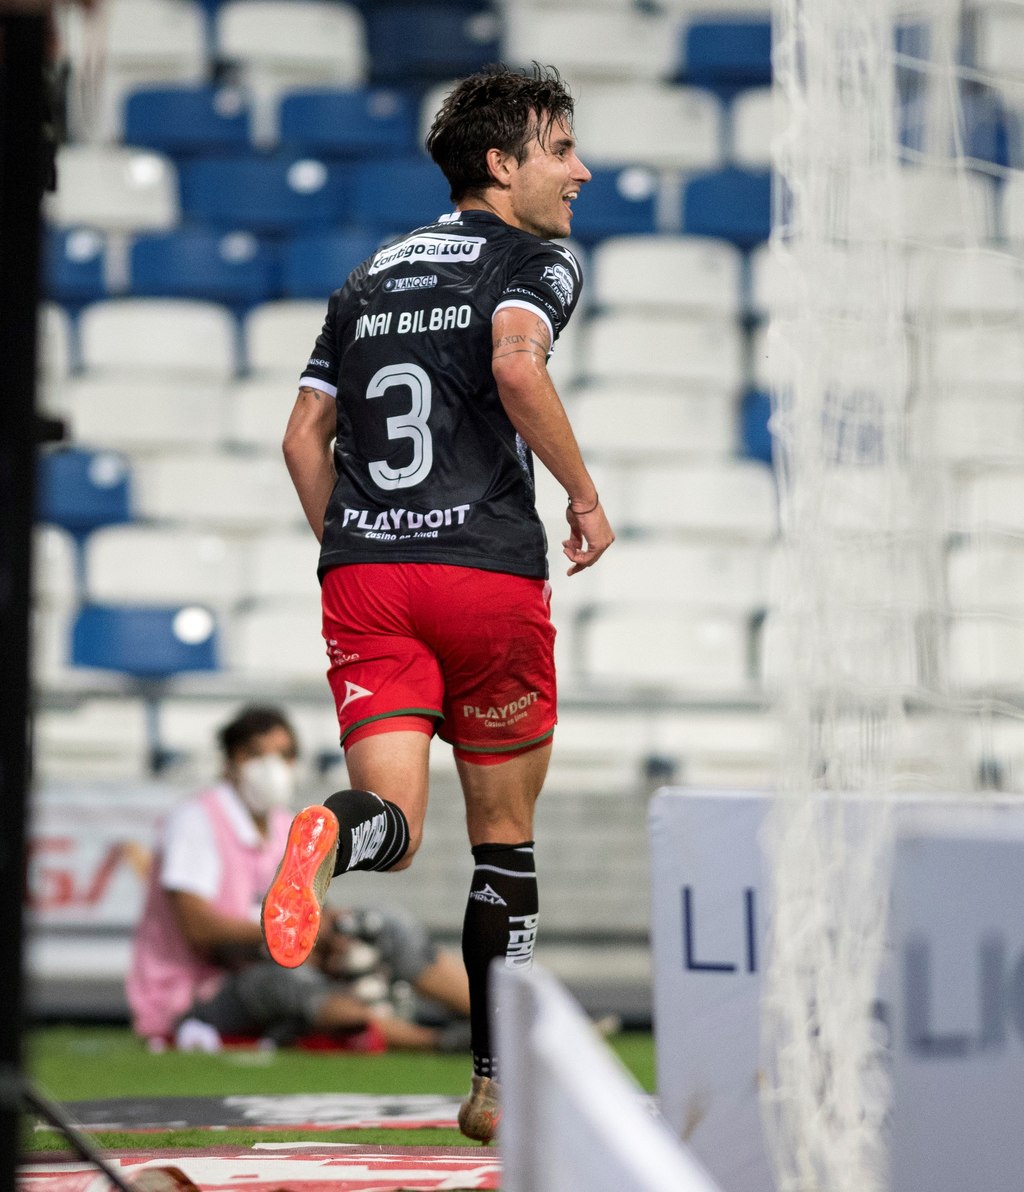 Unai Bilbao marcó el gol del empate para el Necaxa. (EFE)